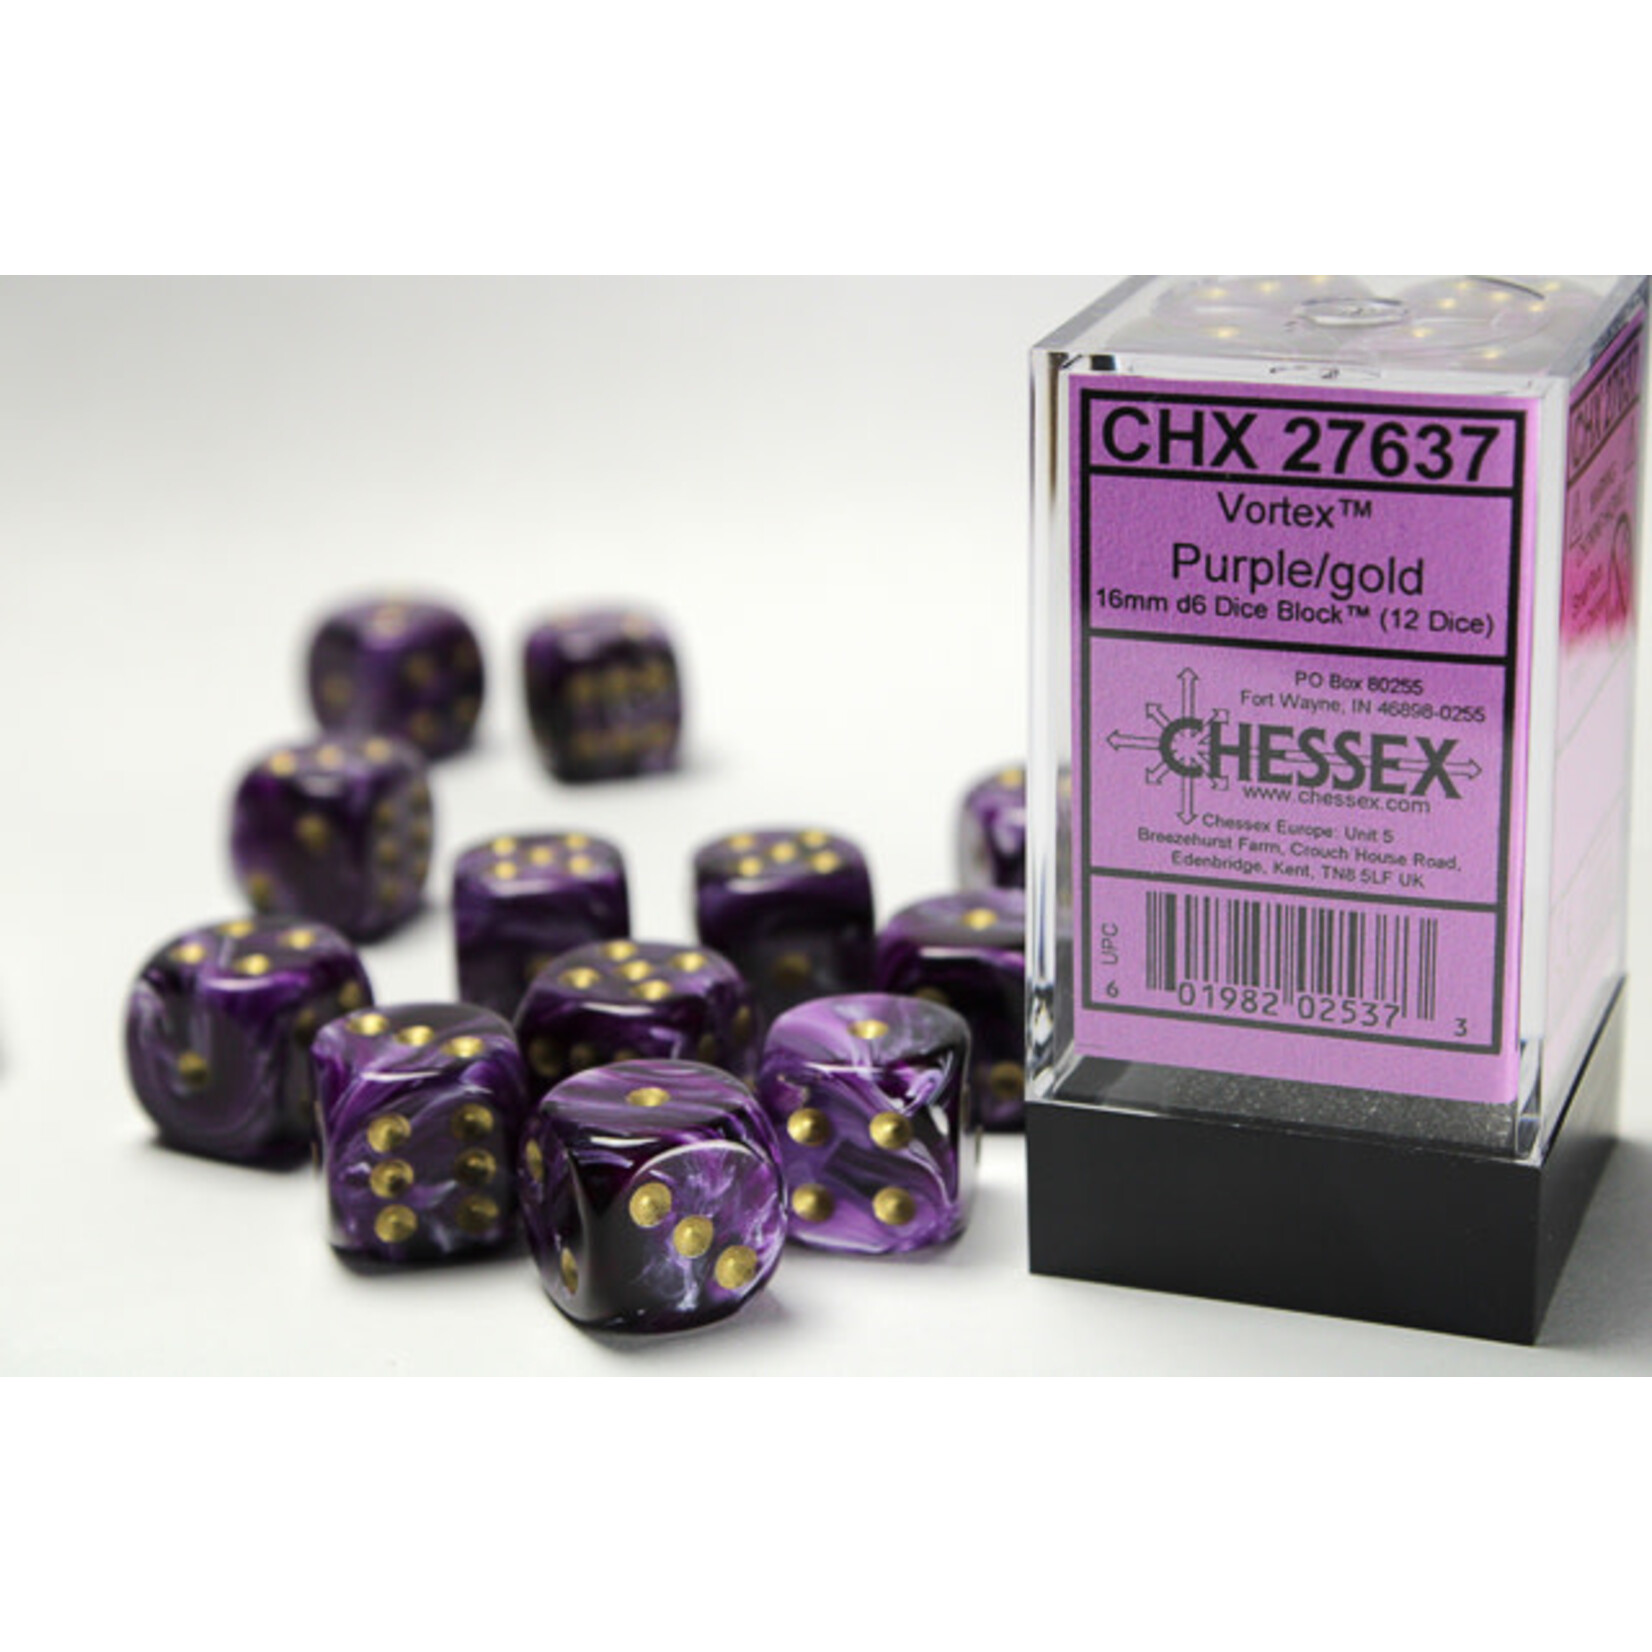 Chessex Dice 16mm 27637 12pc Vortex Purple/Gold